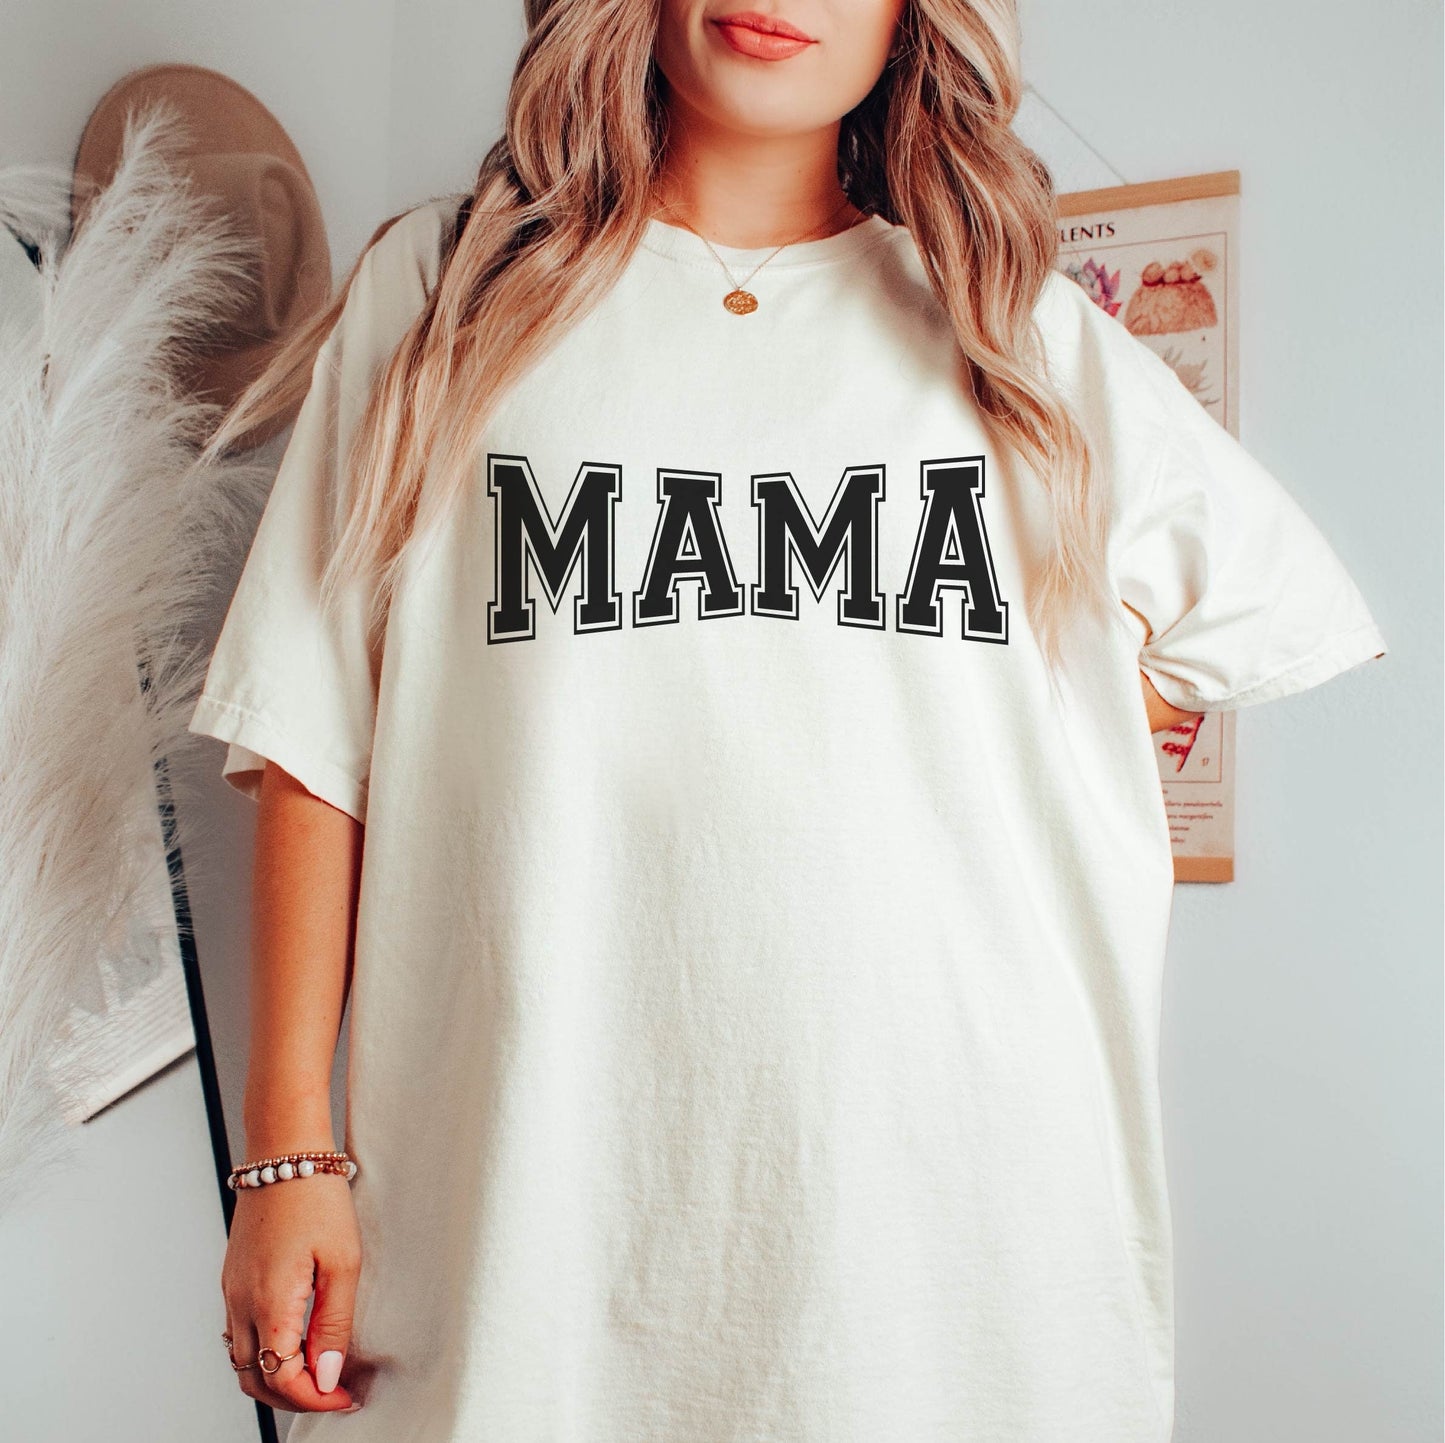 Mom Tee, Mama Tee, Gifts for Mom, Mama Shirt, Momlife, Mom Shirt, Gift for Mom, Gifts for her, Mama Tshirt, Trendy Mama Shirt